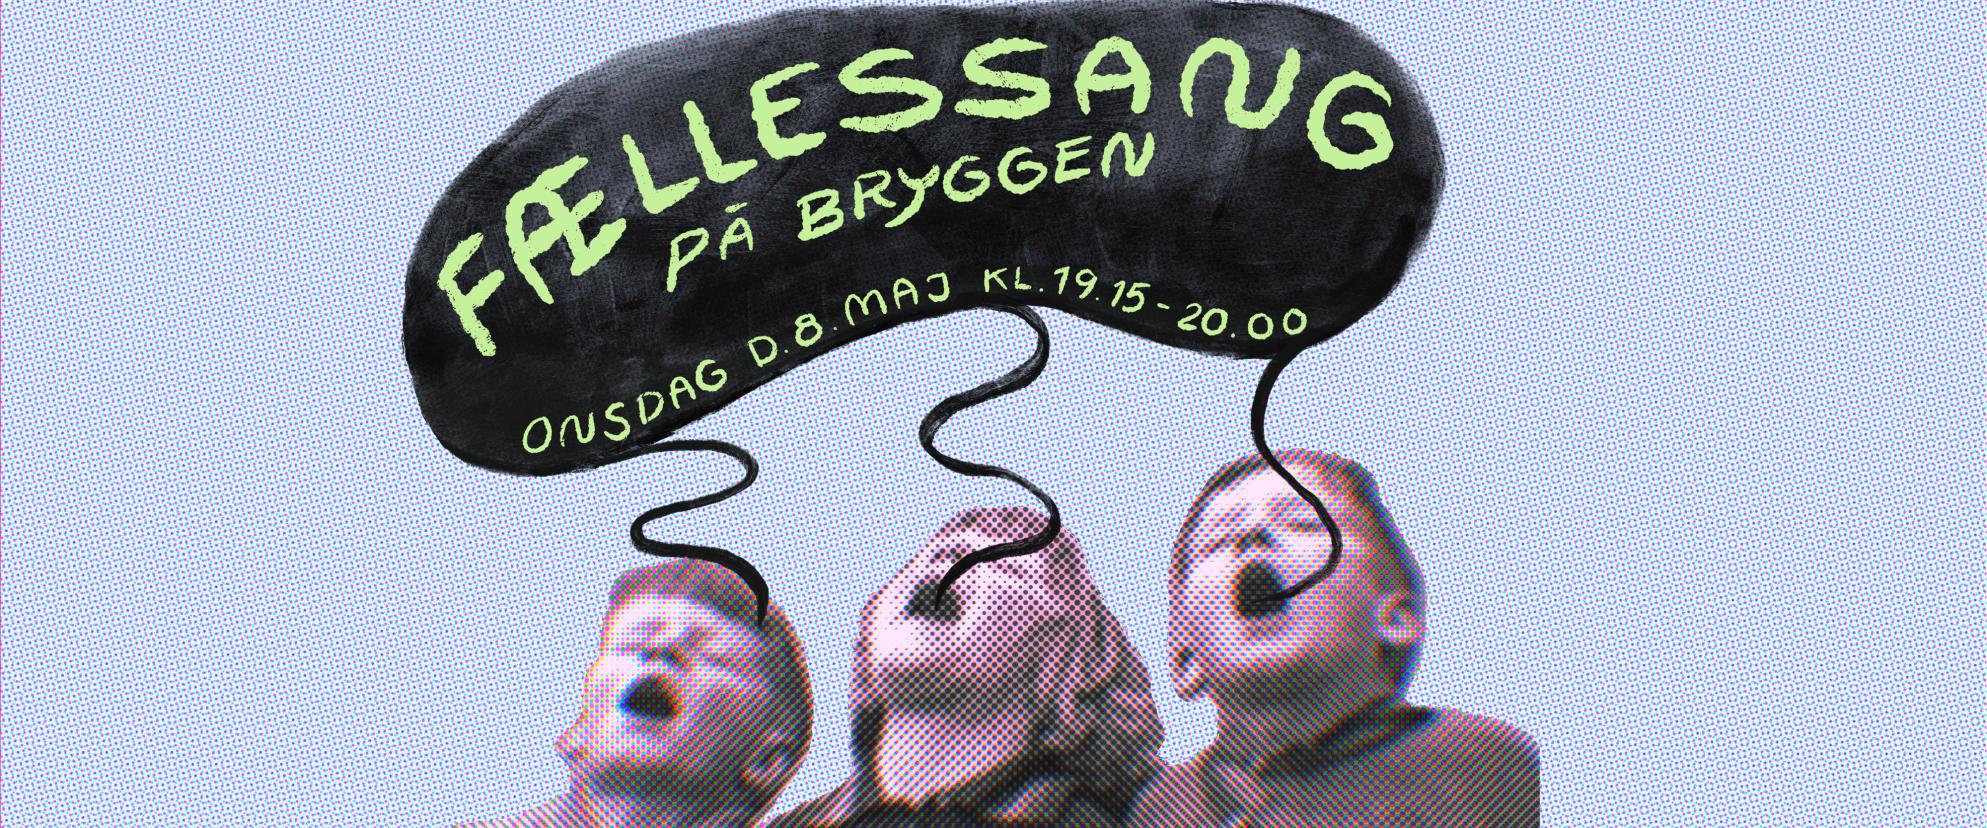 Fællessang på Bryggen onsdag den 8. maj kl. 19.15 - 20